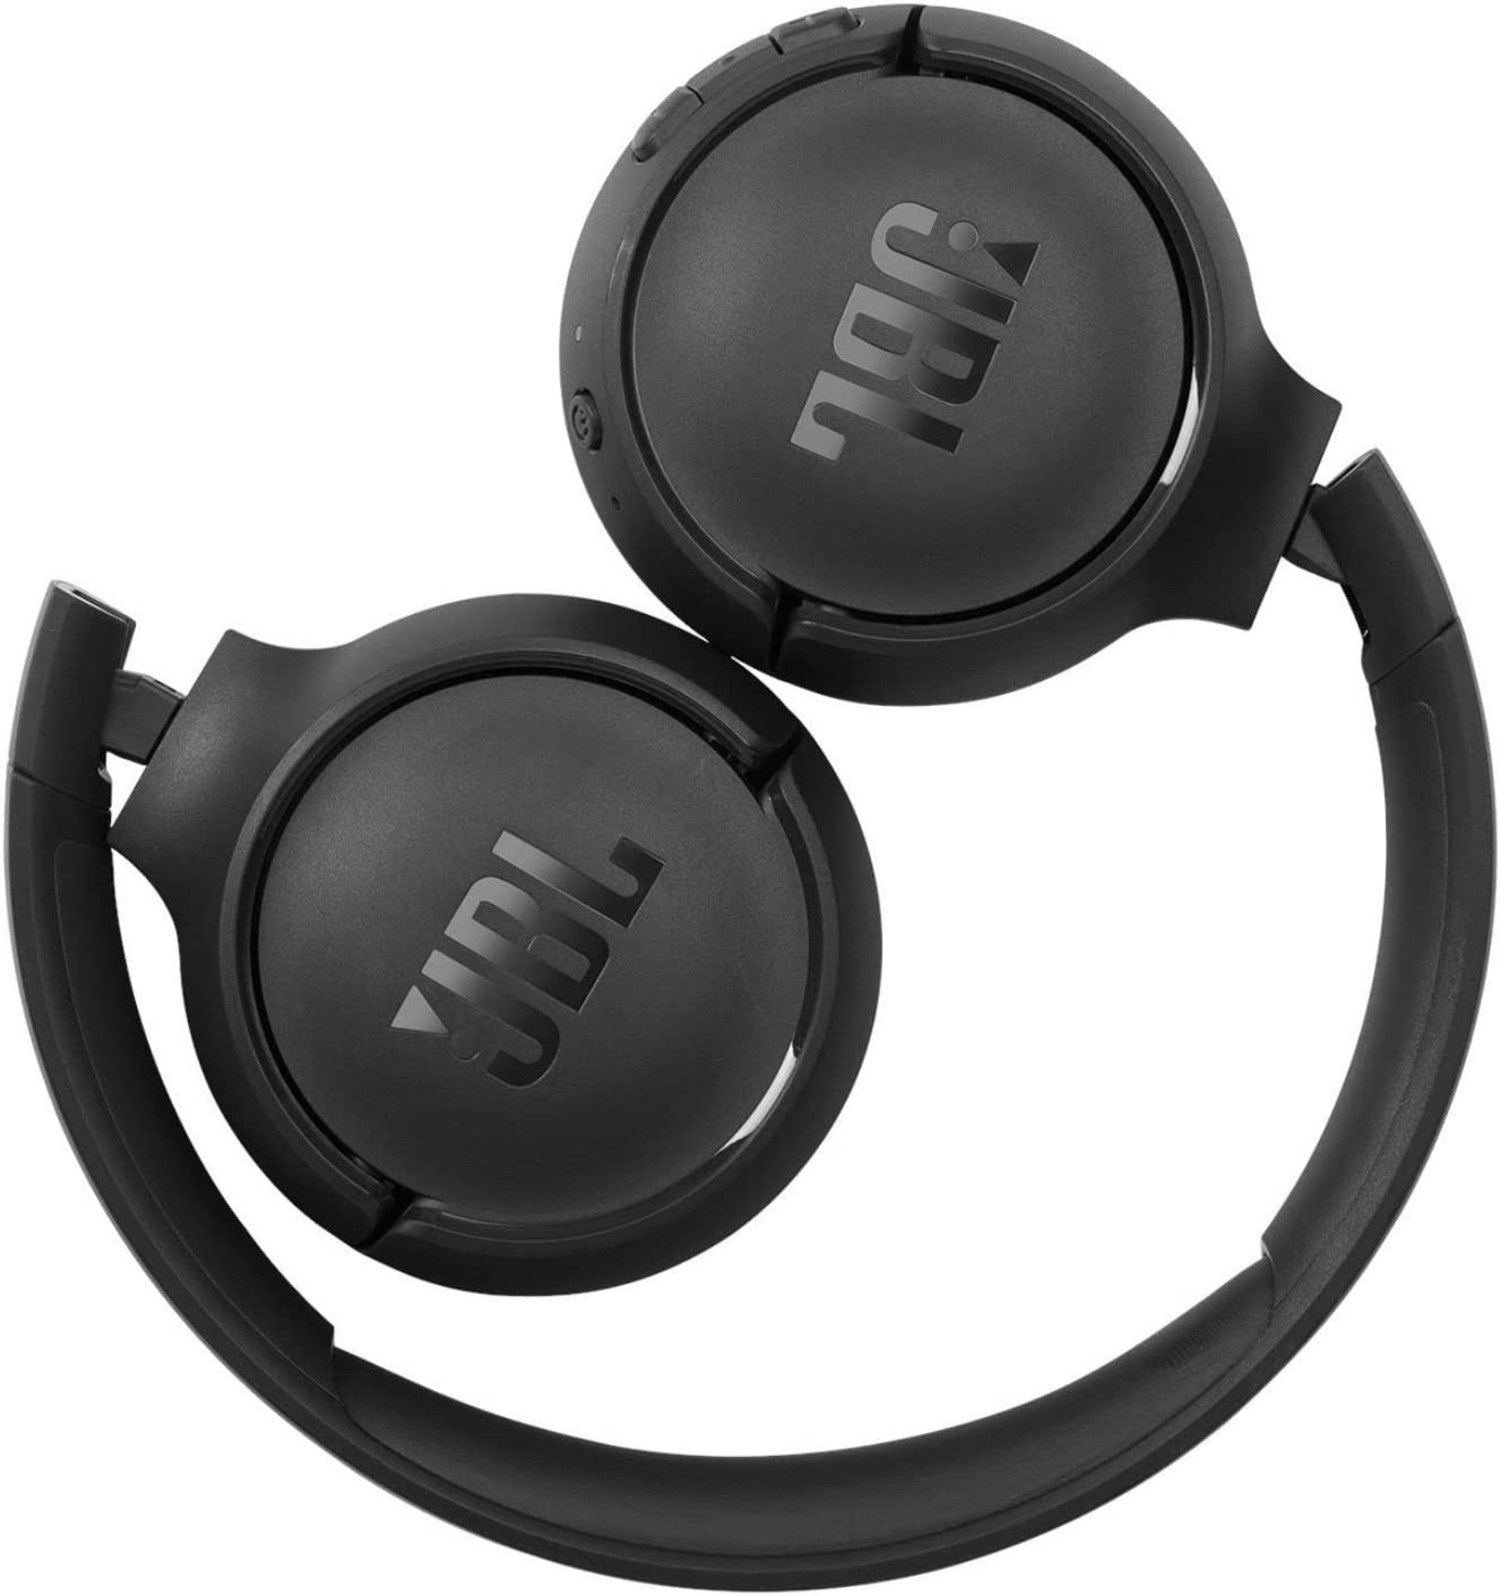 New JBL Tune 510BT: Wireless On-Ear Headphones with Purebass Sound